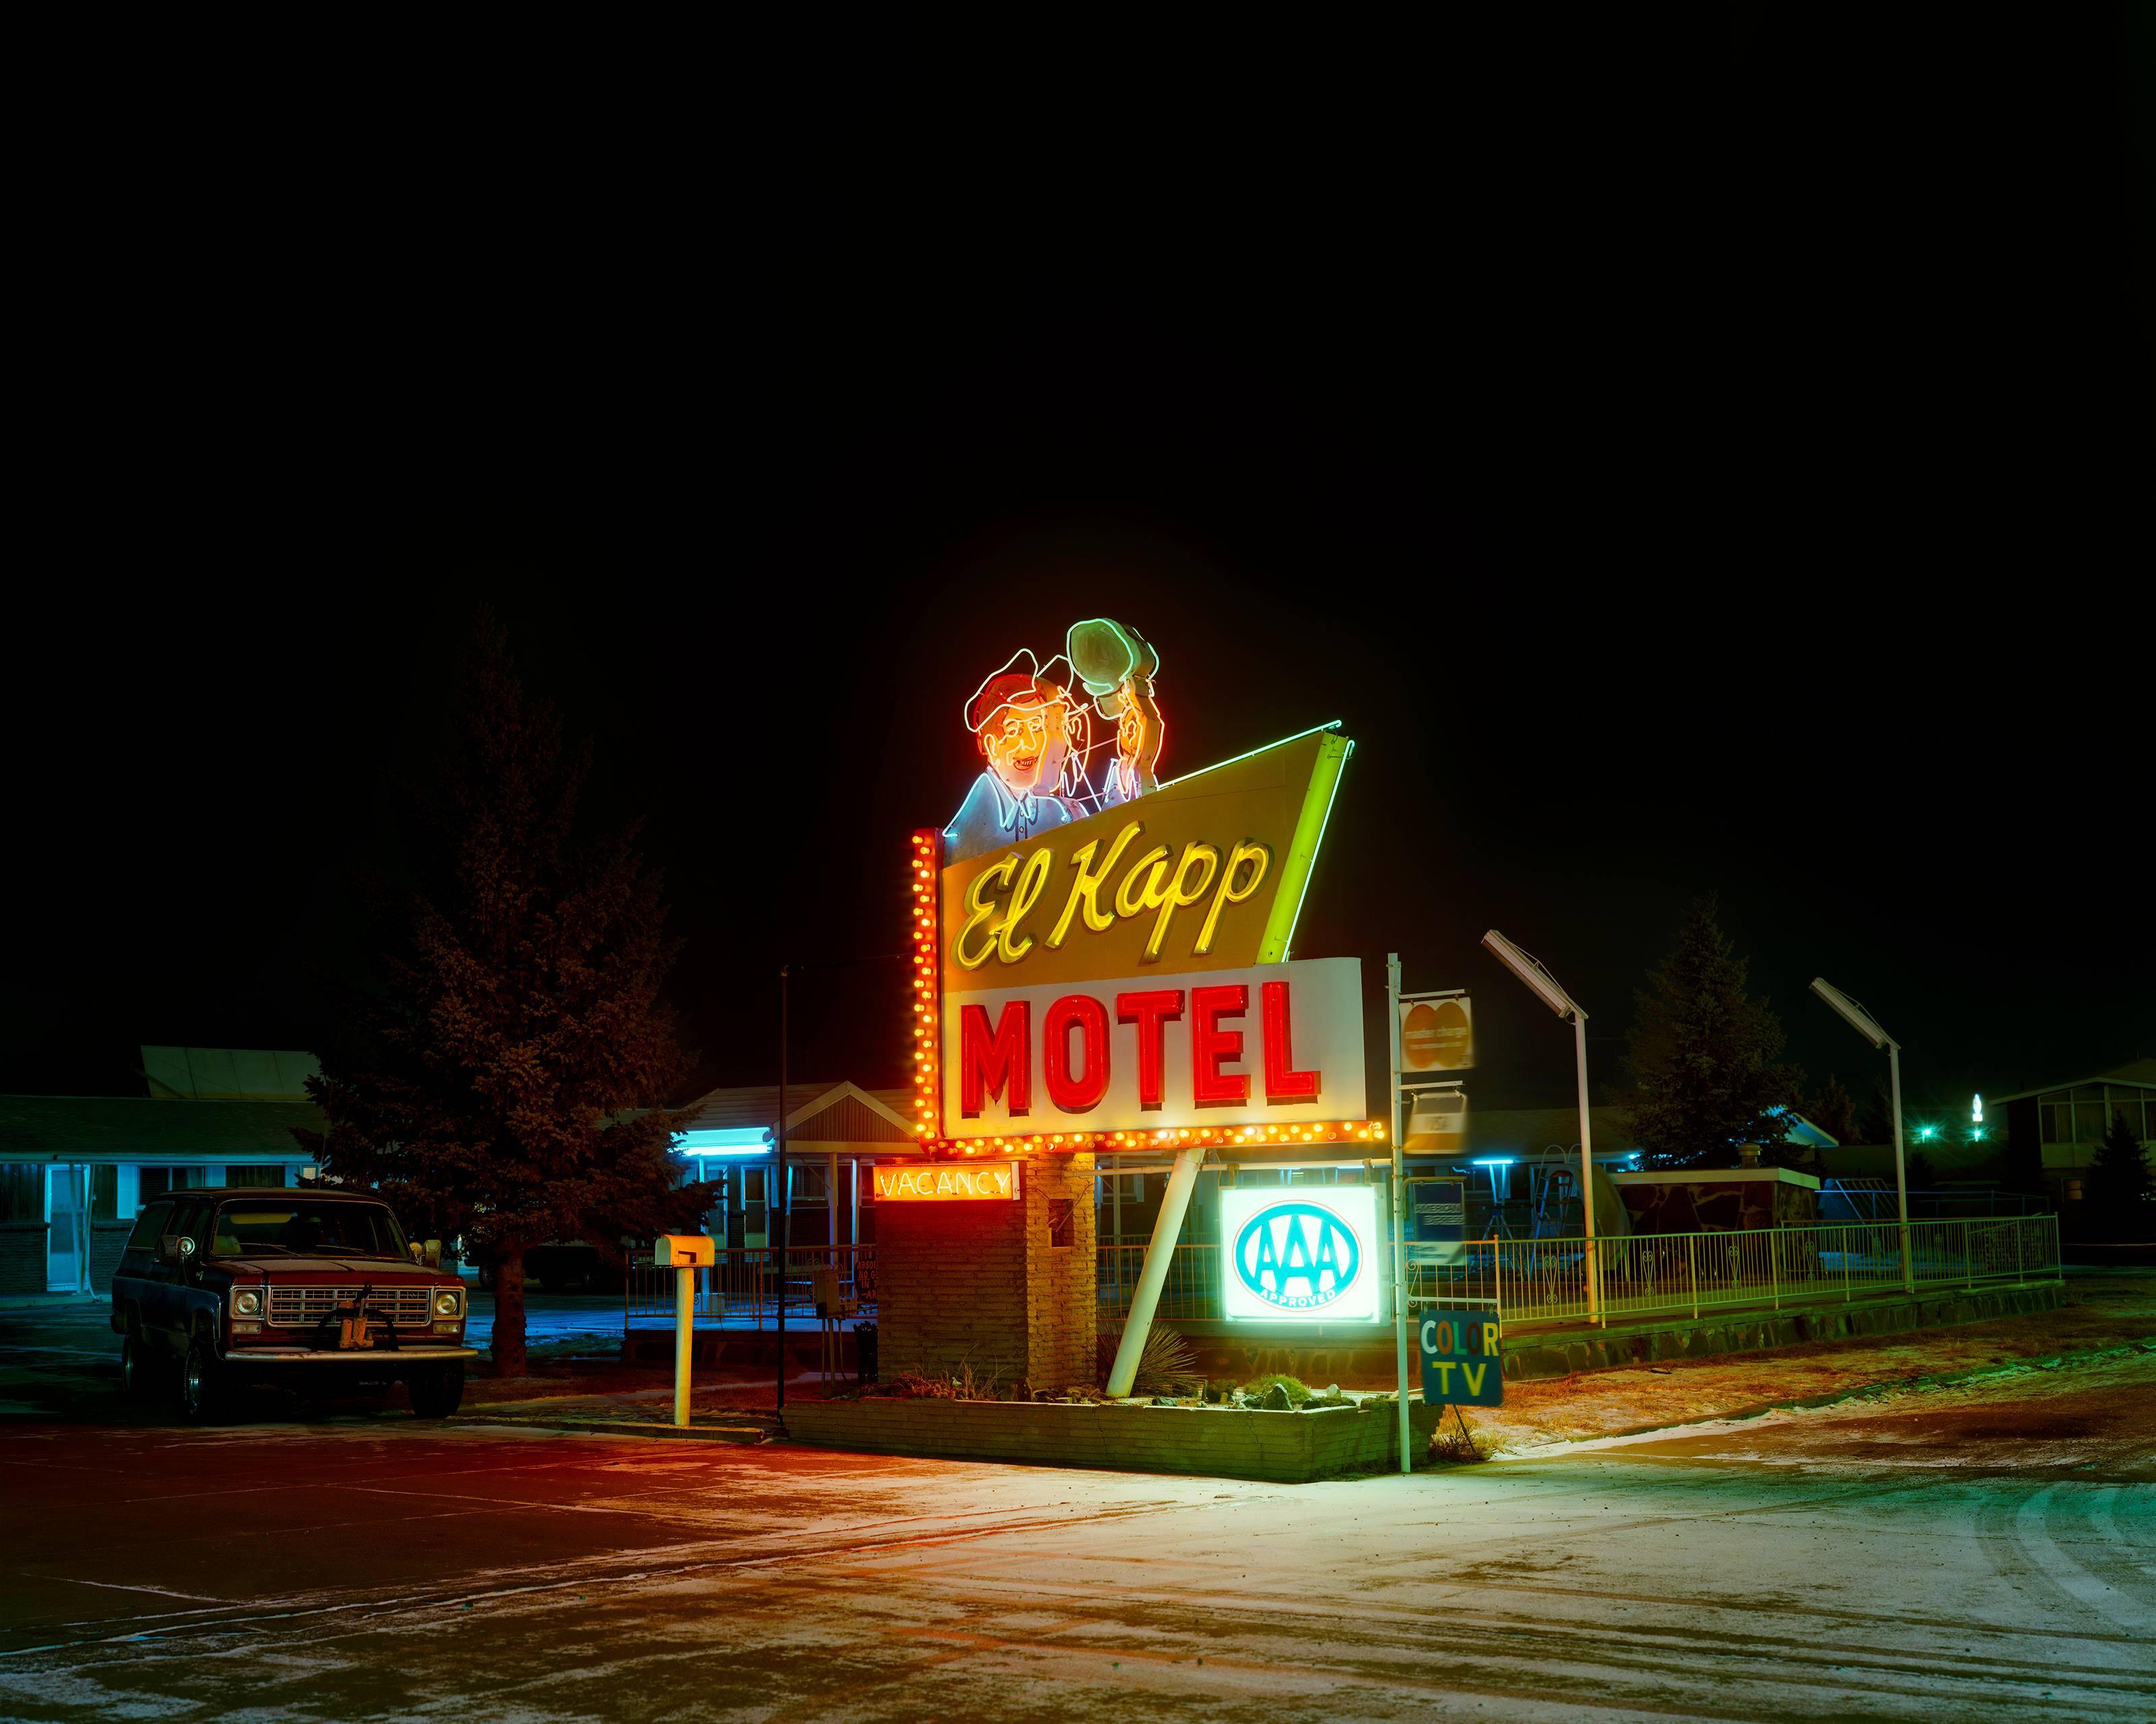 El Kapp Motel, Highway 64, Raton, New Mexico; December 19, 1980